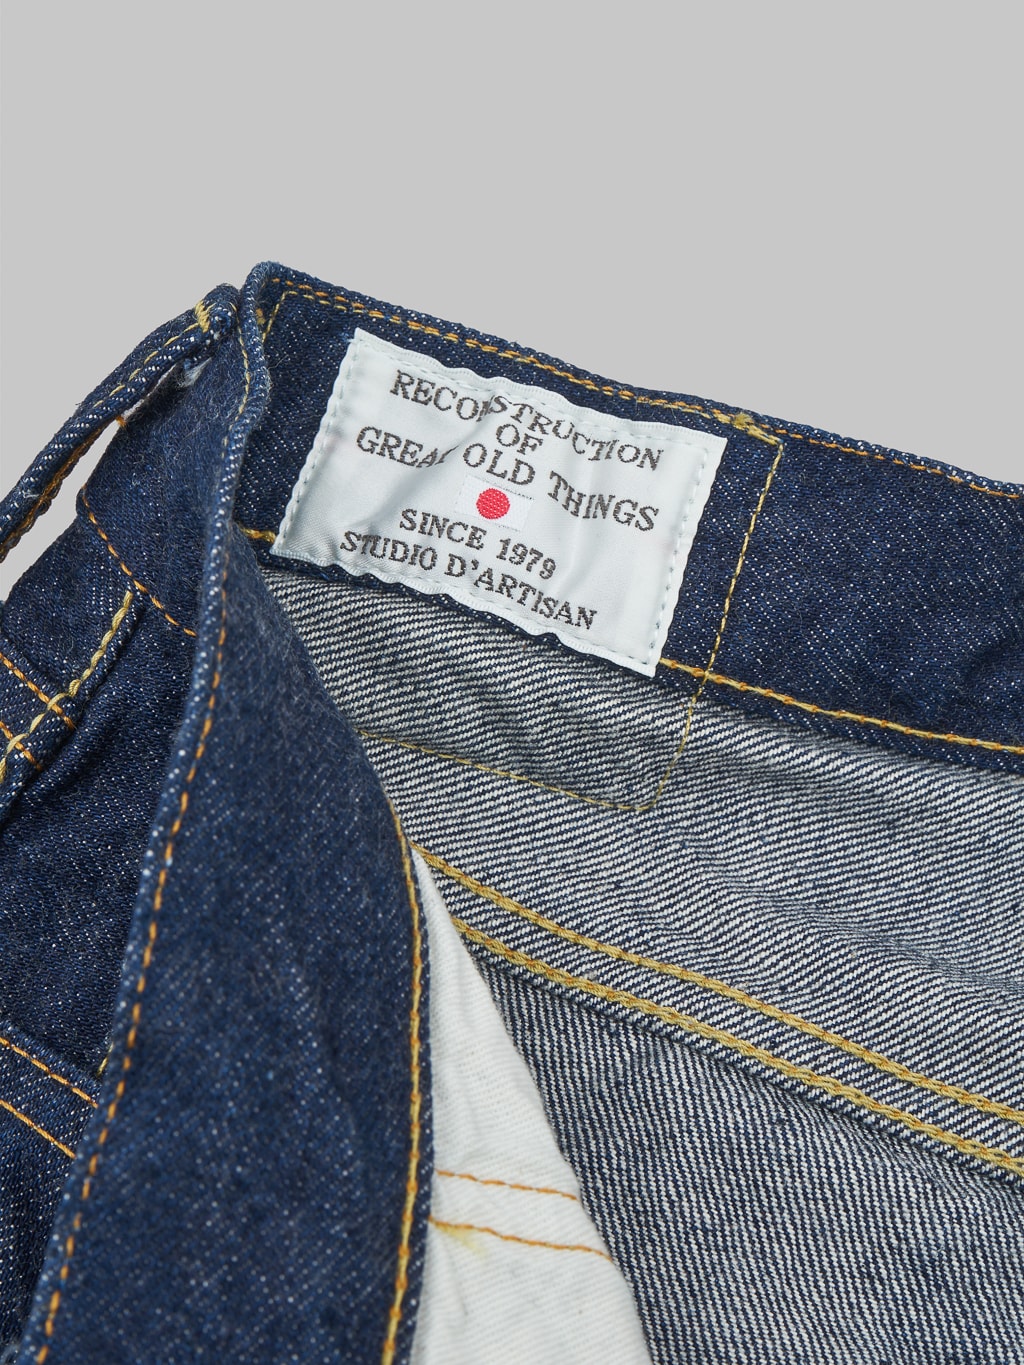 Studio D'Artisan natural indigo jeans interior label